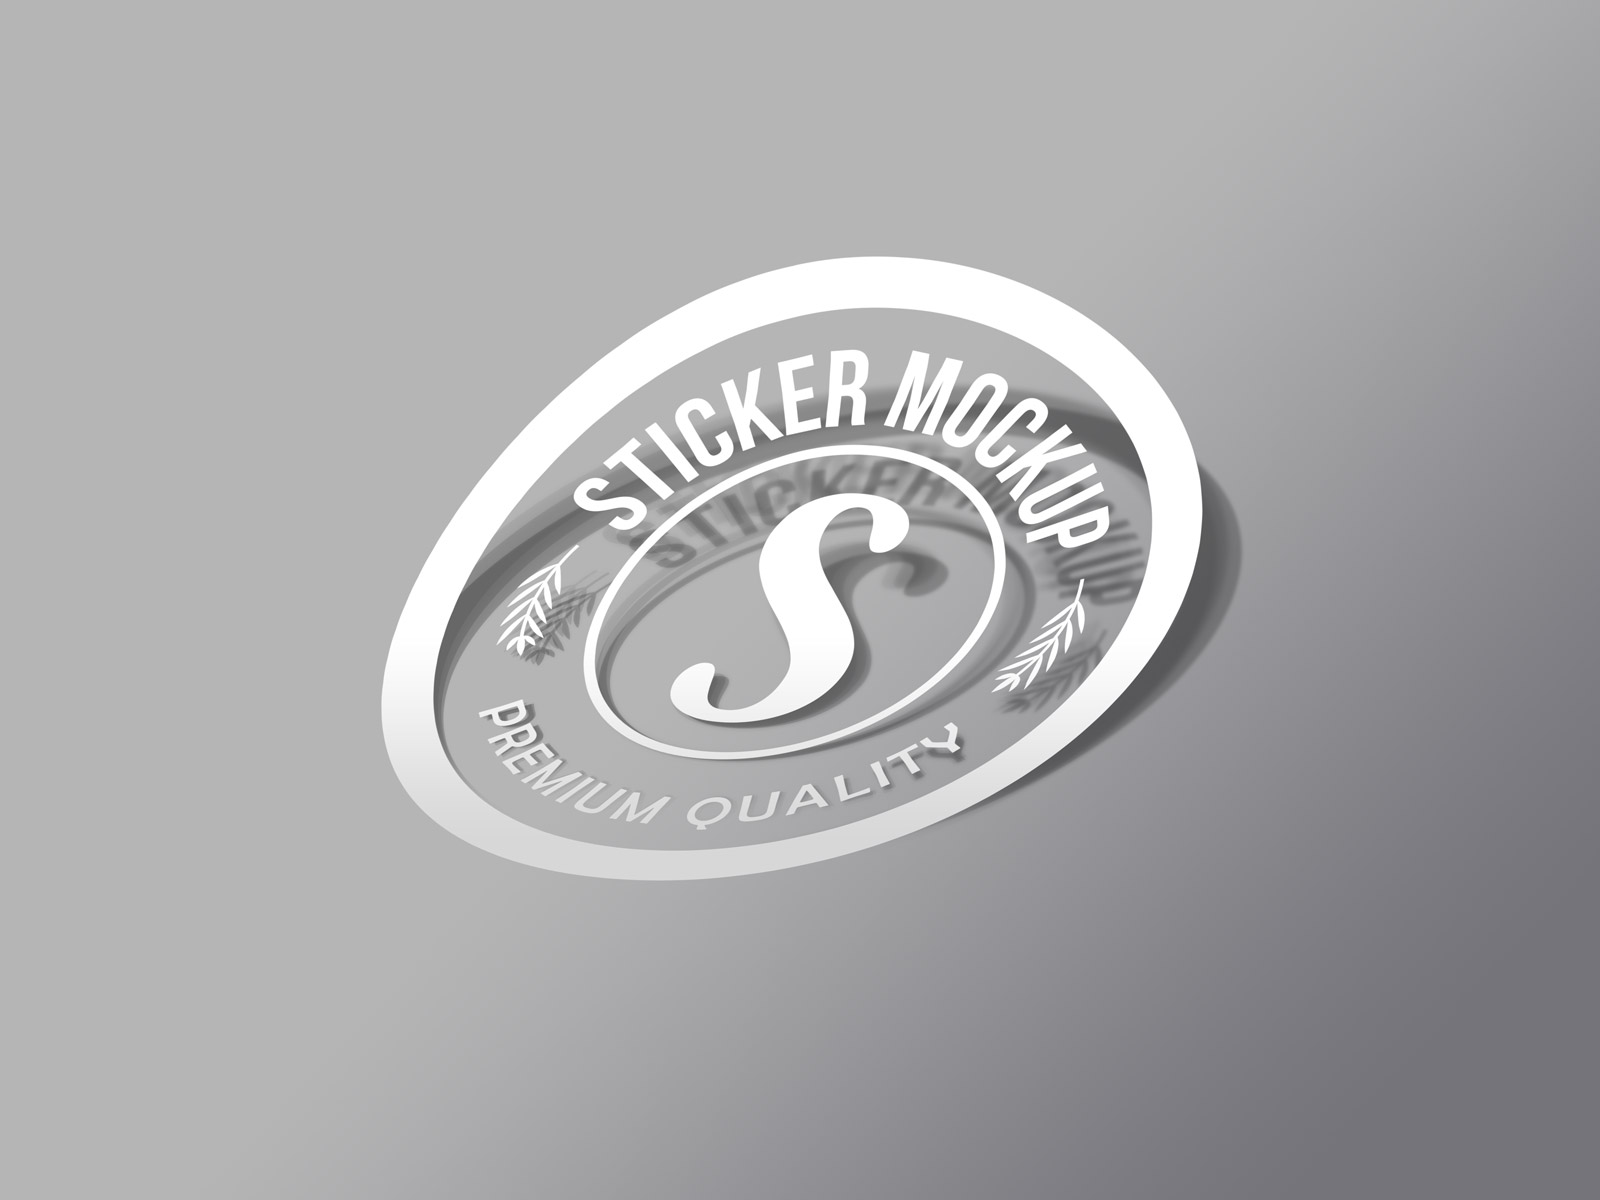 Download Free Photorealistic Sticker Mockup PSD | Free Mockups, Best Free PSD Mockups - ApeMockups